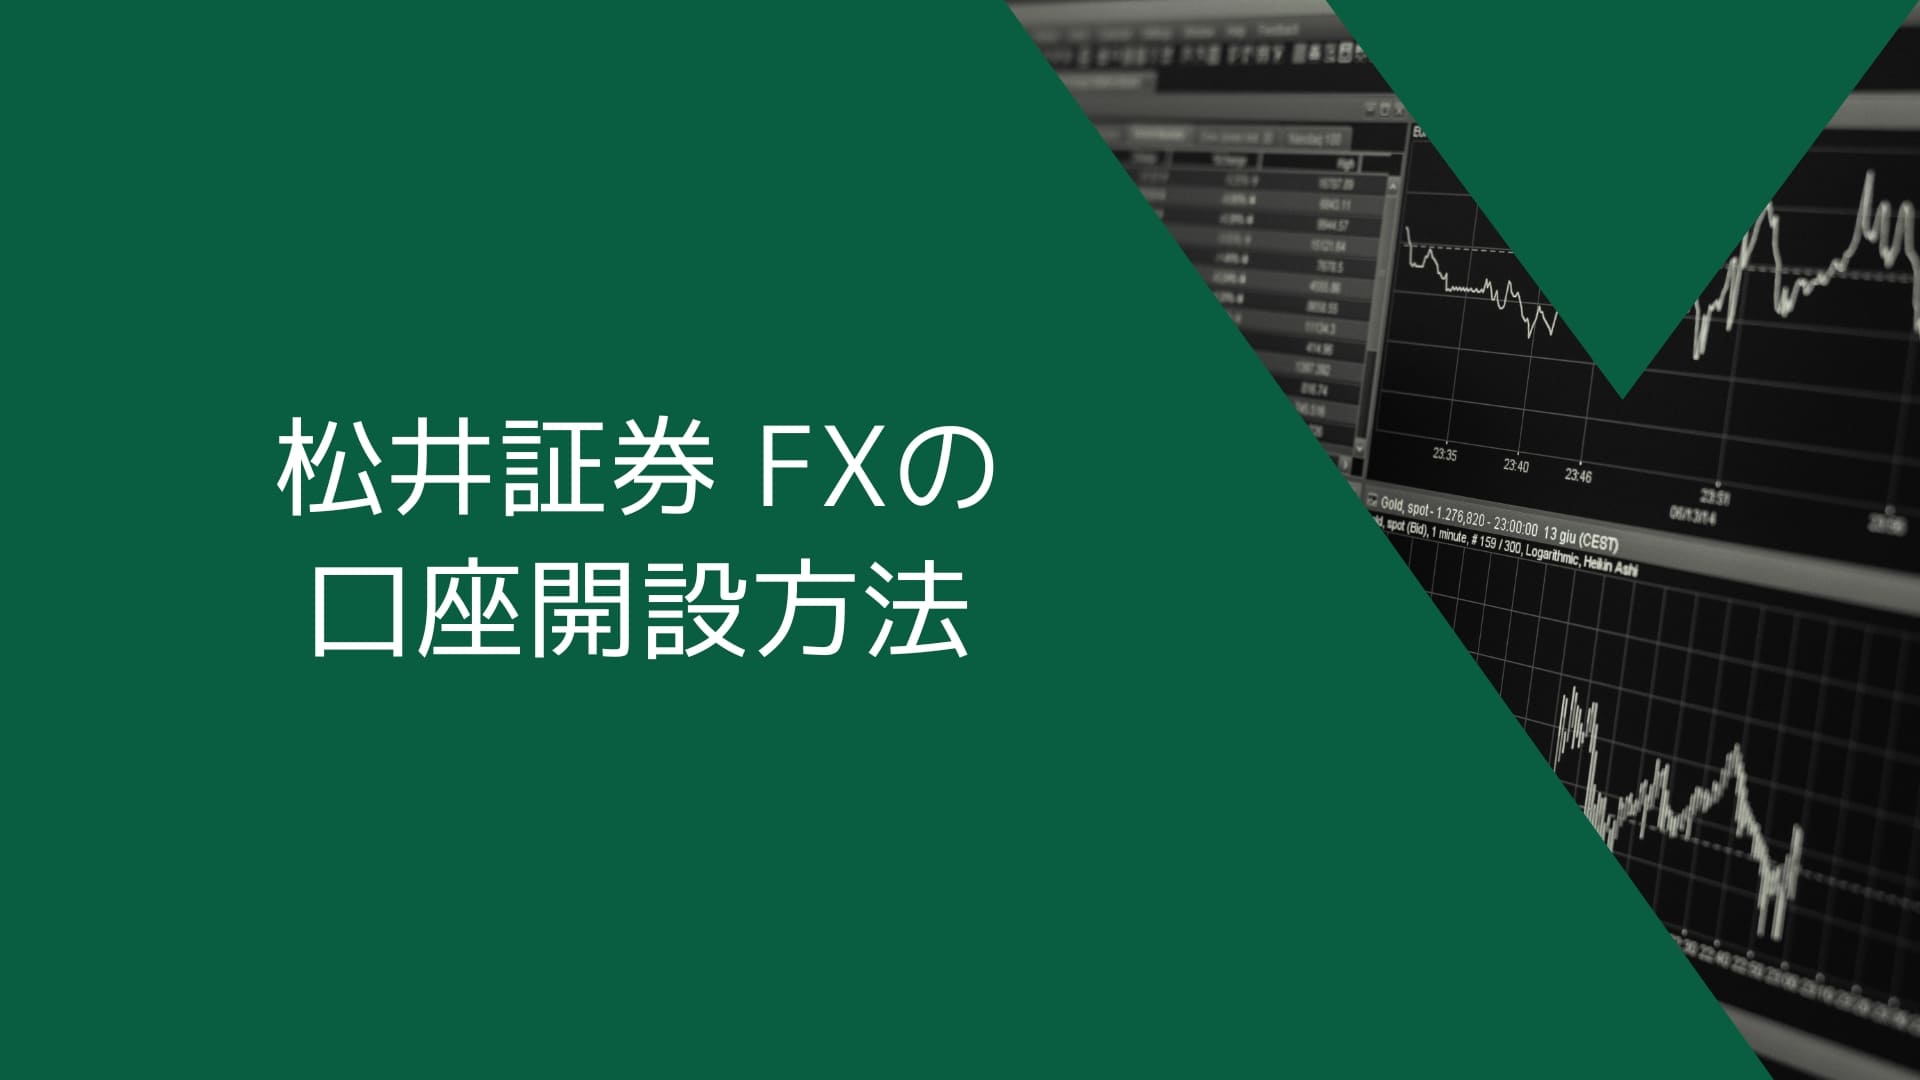 松井証券（MATSUI FX）の口座開設方法